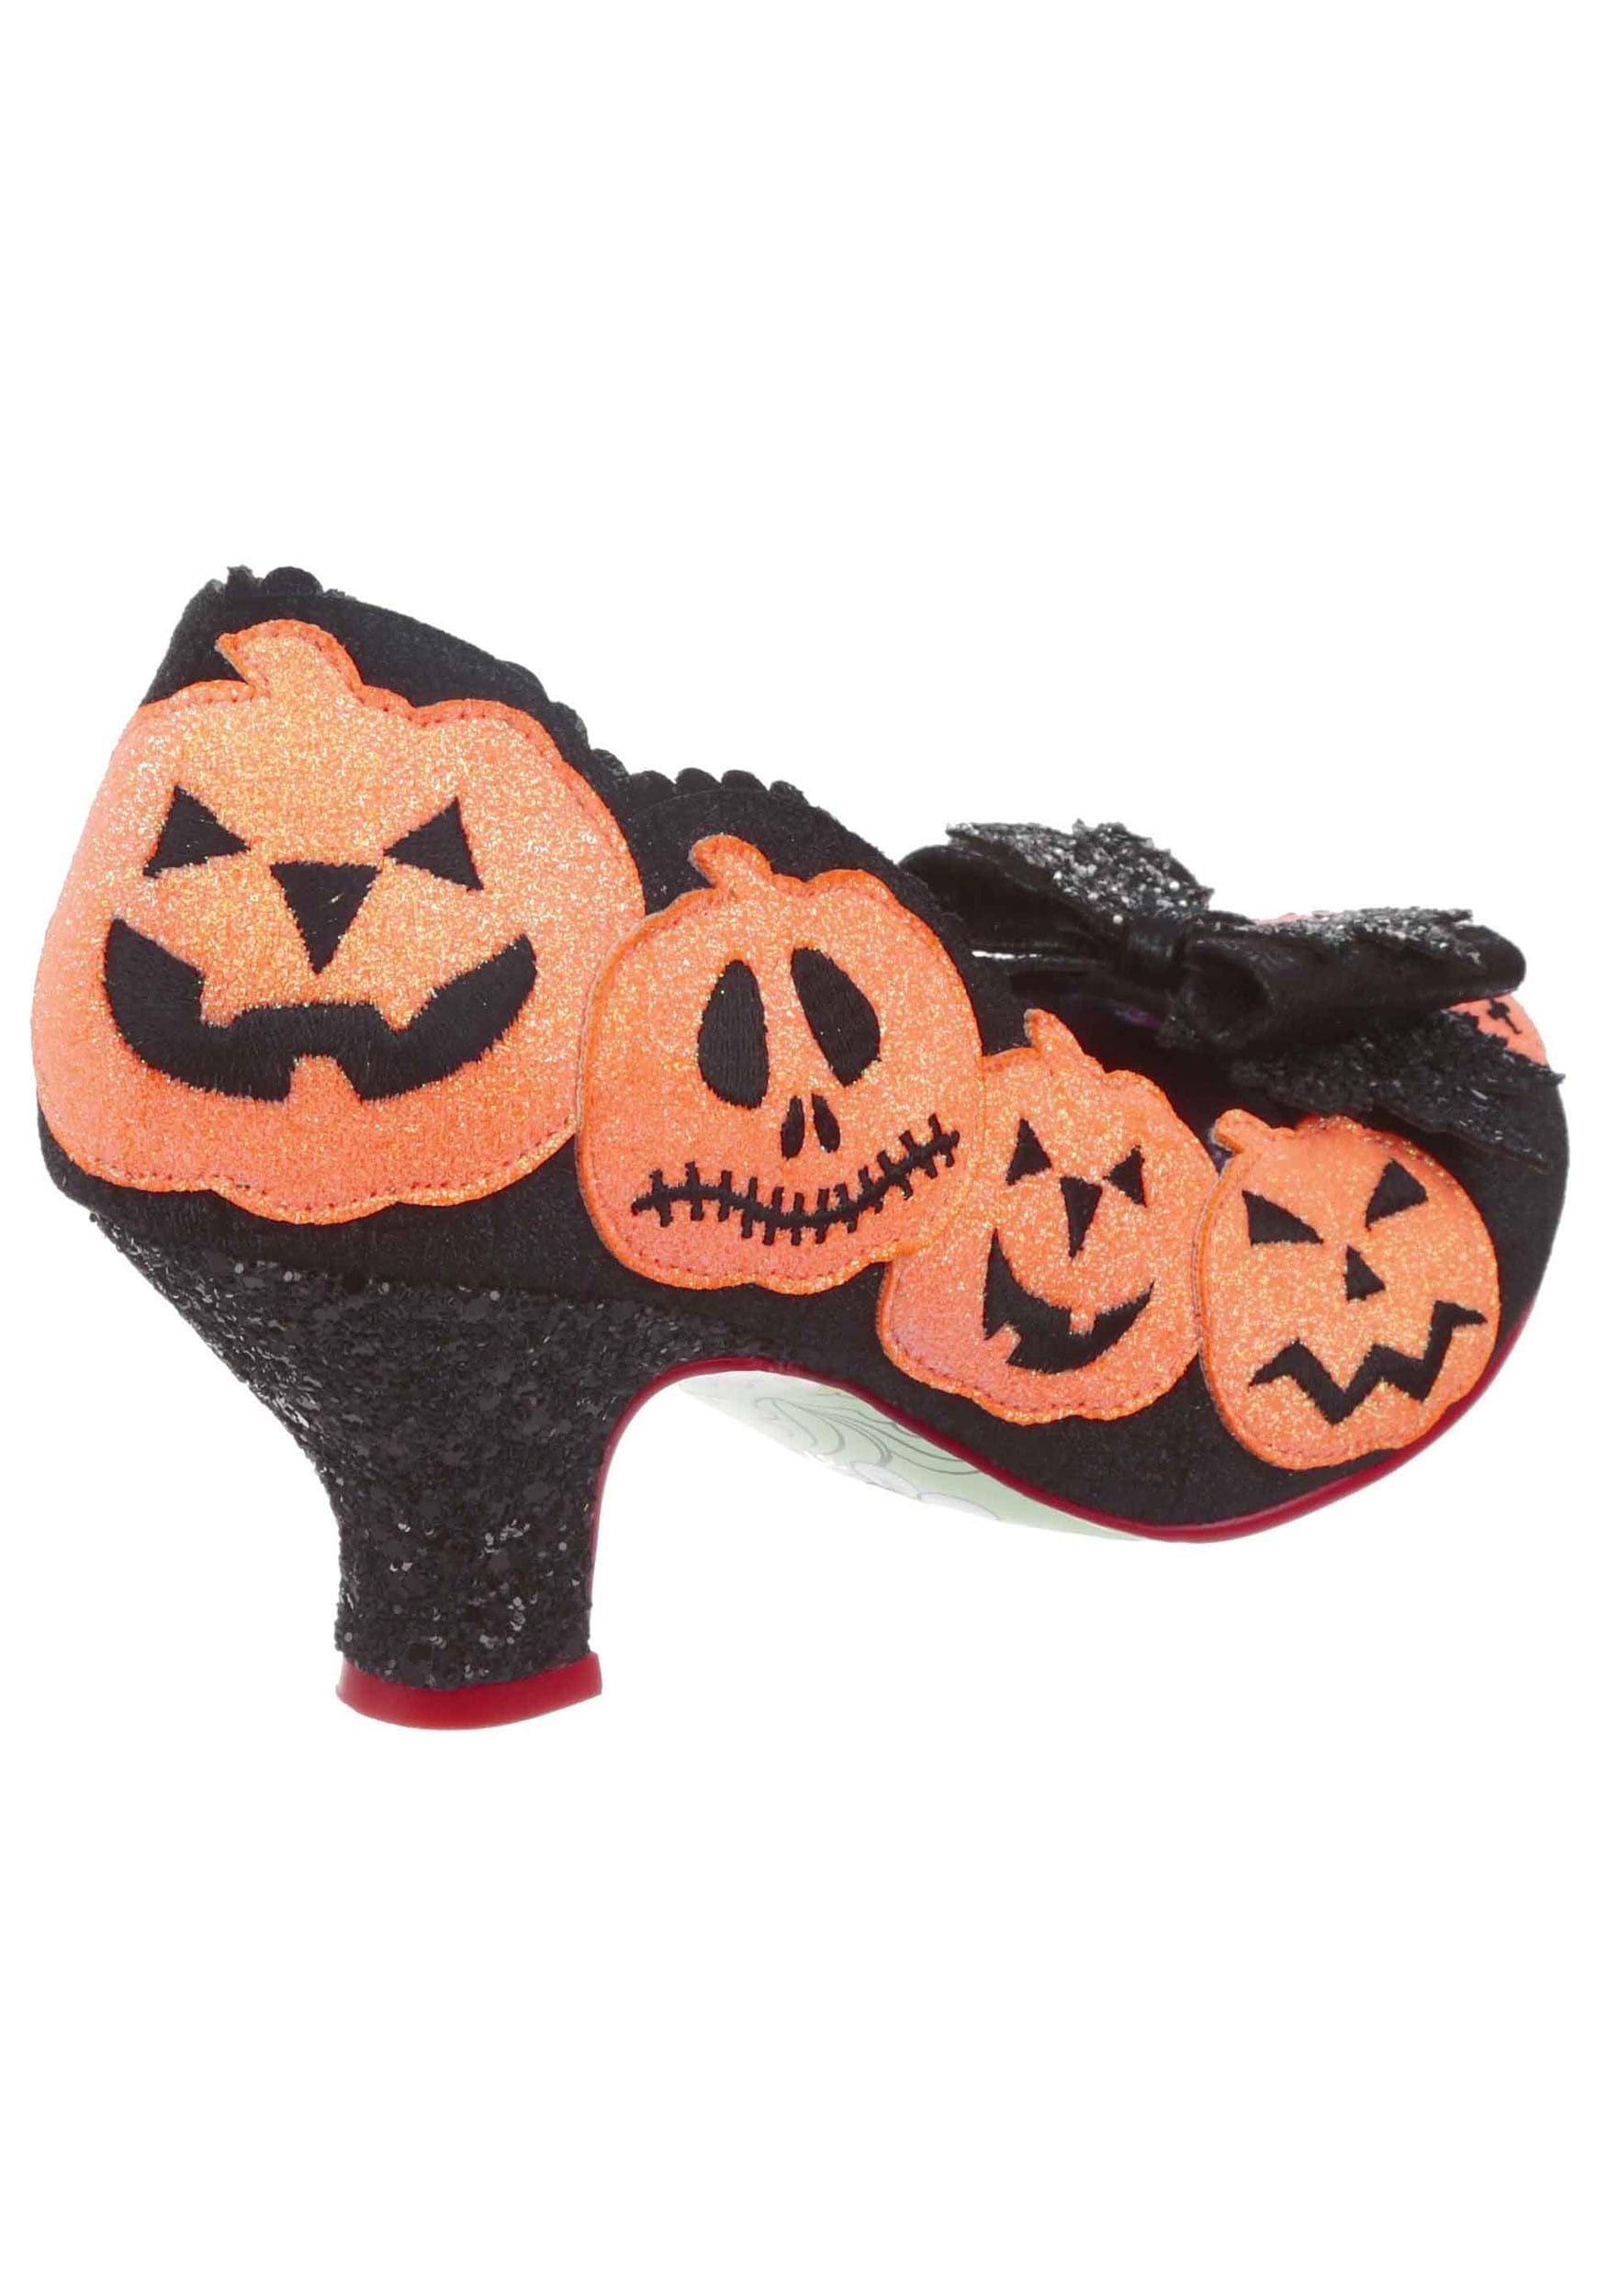 Pumpkin Carving Low Heels By Irregular Choice